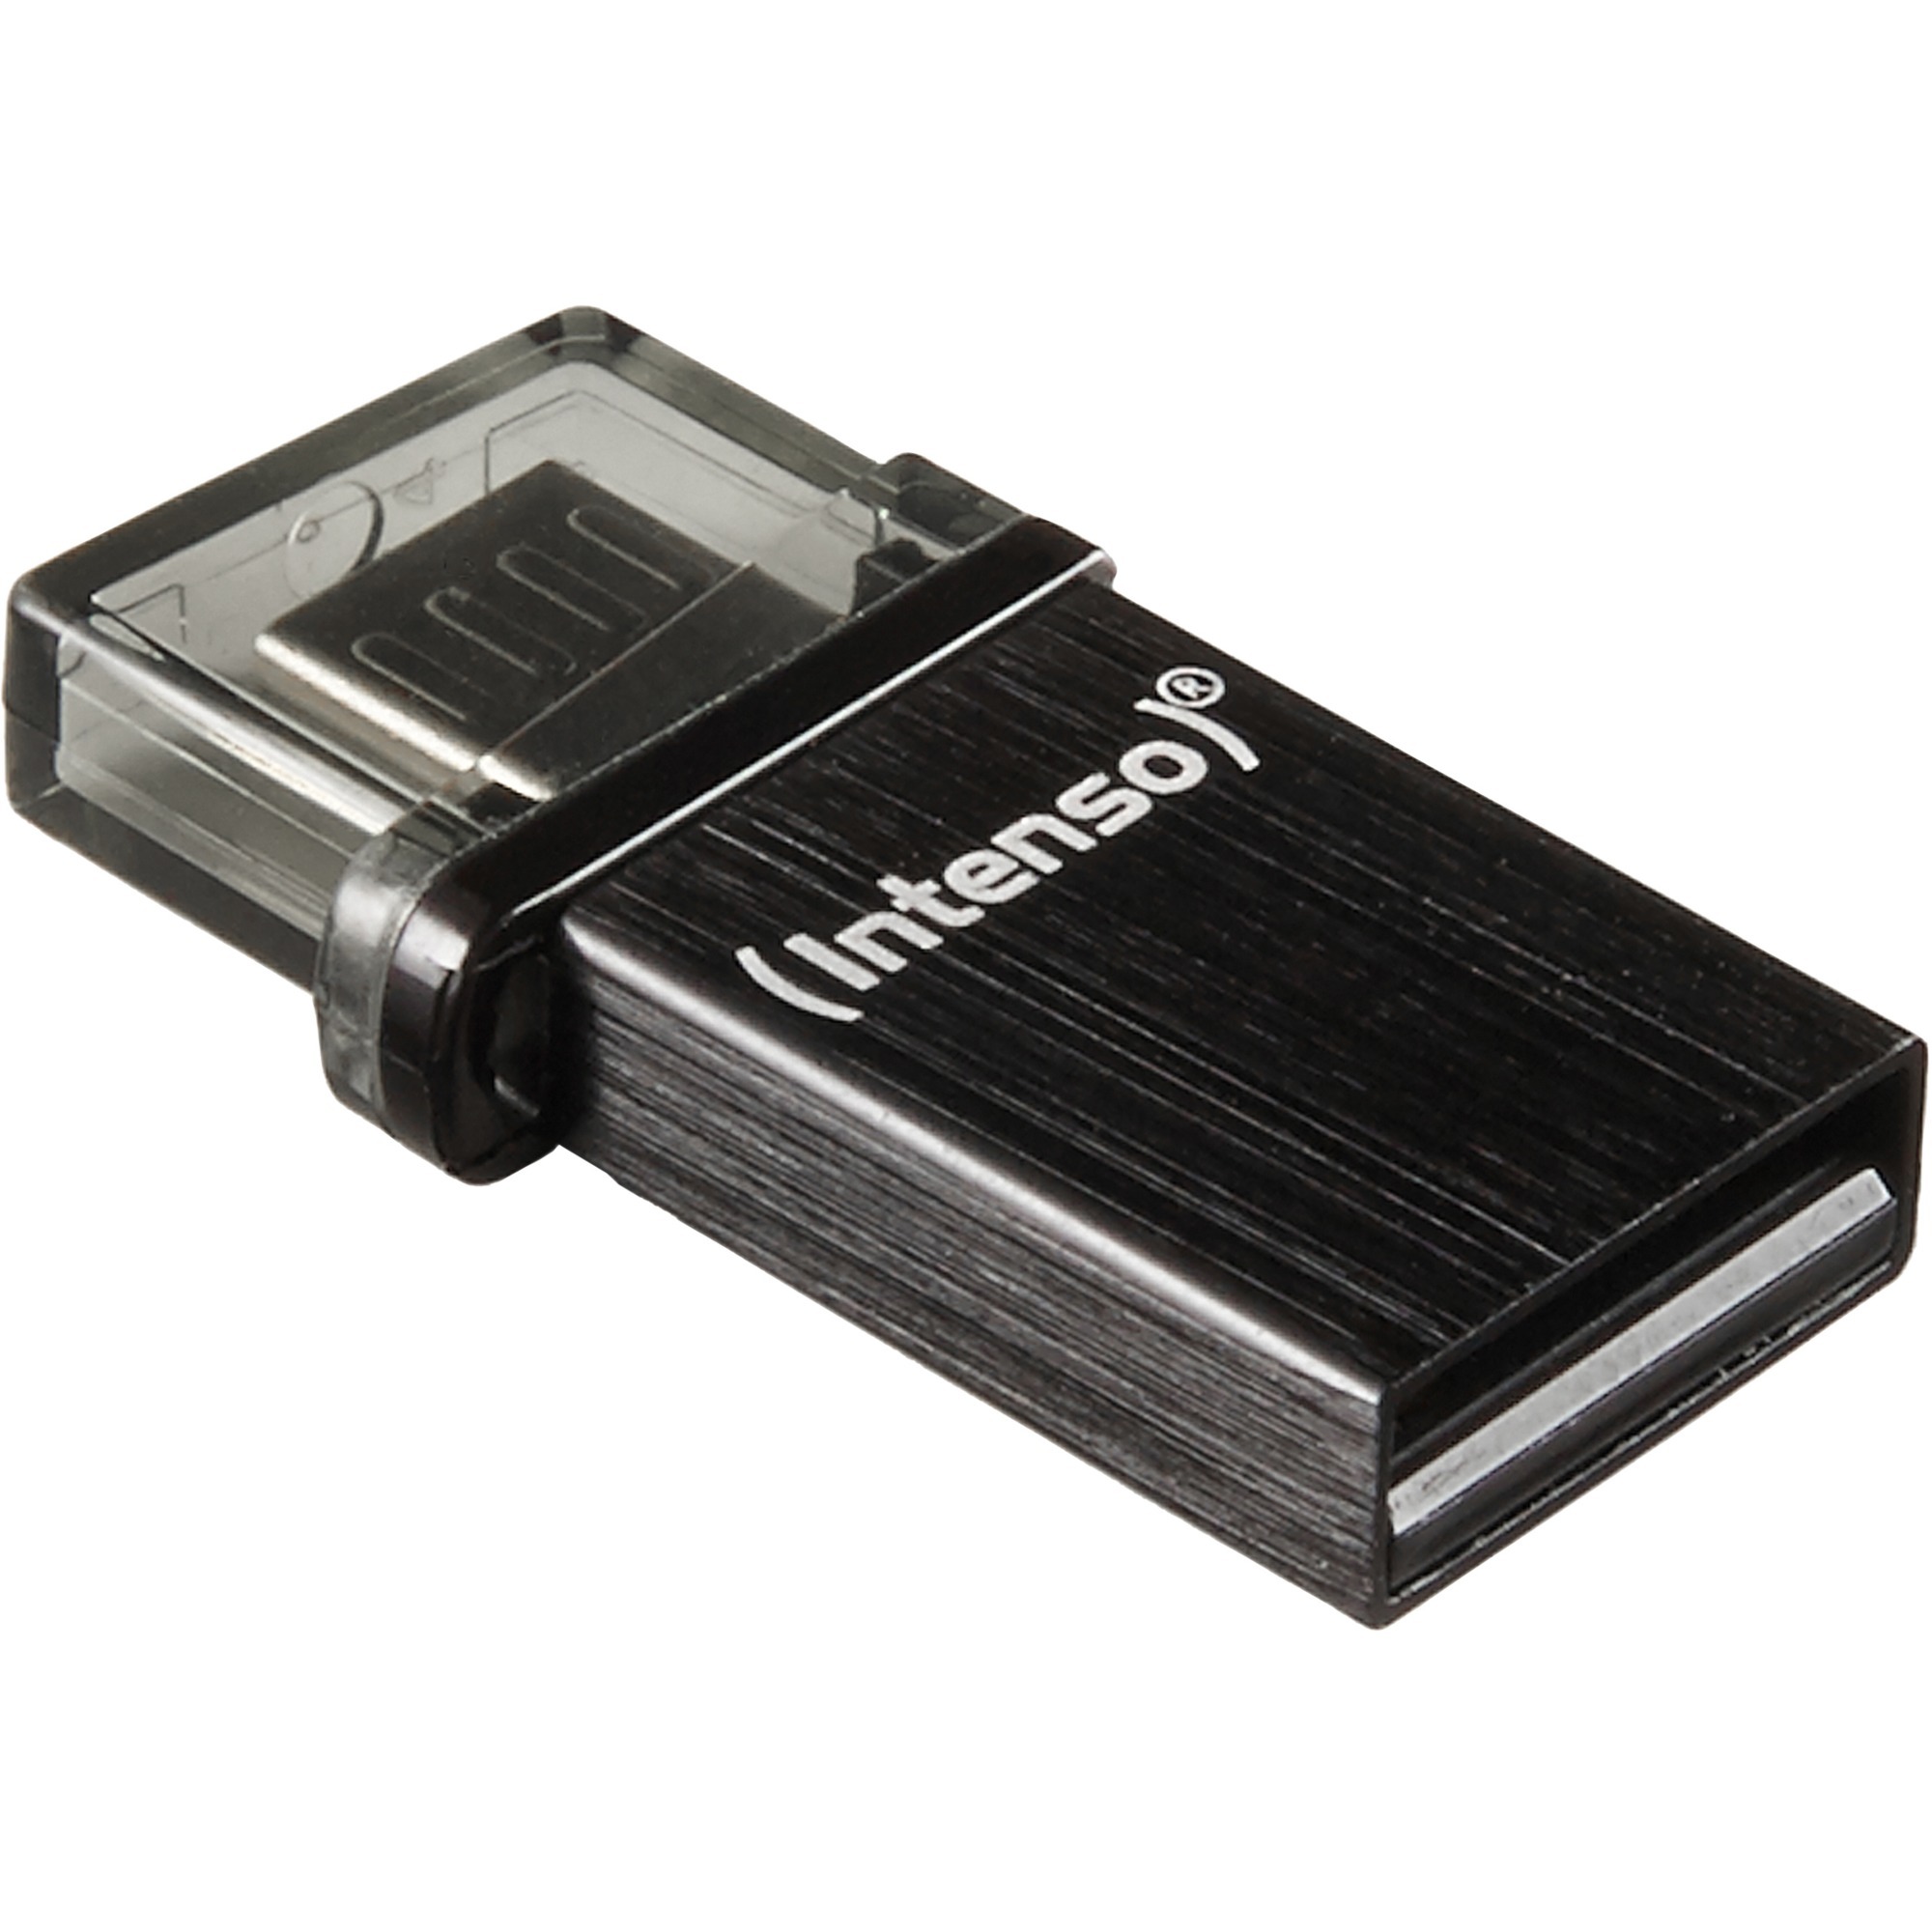 Image of Alternate - 8GB Mini MOBILE LINE, USB-Stick online einkaufen bei Alternate